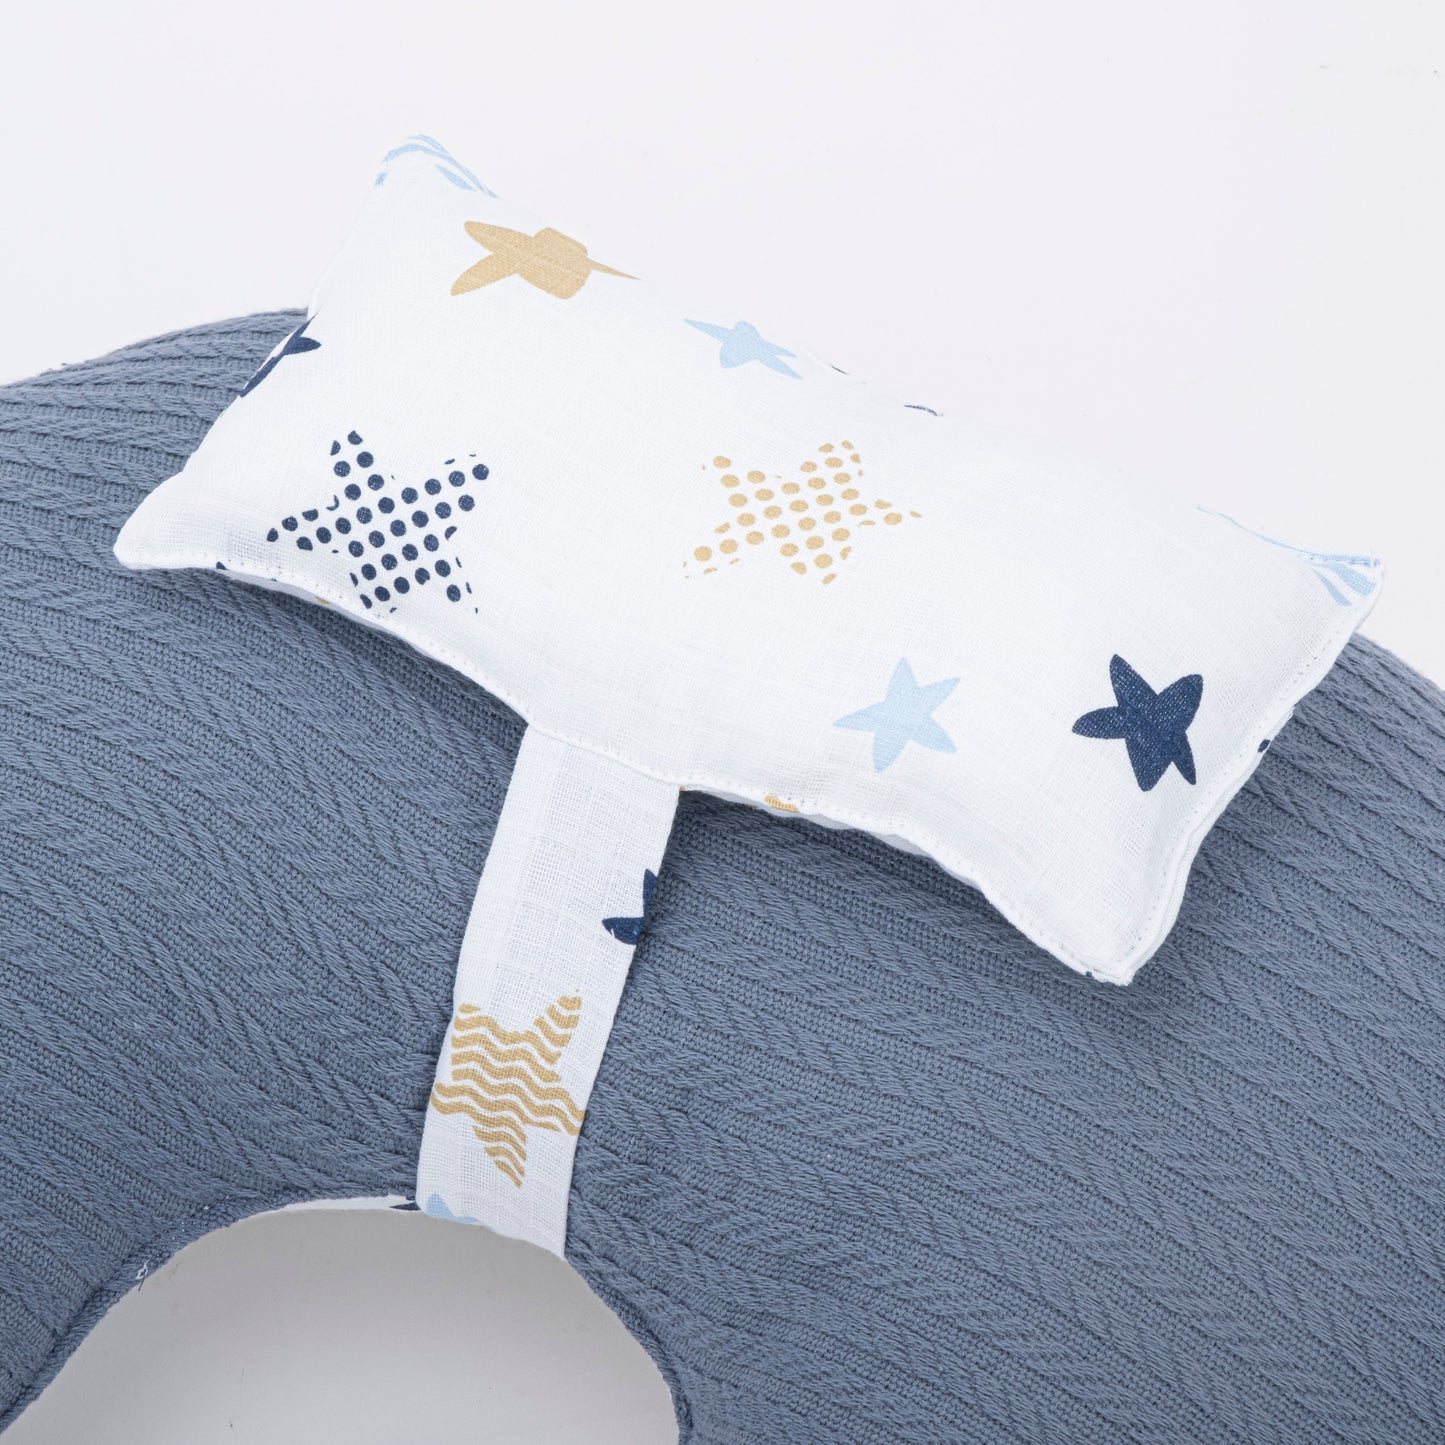 Breastfeeding Pillow - Indigo Knitted - Blue Star